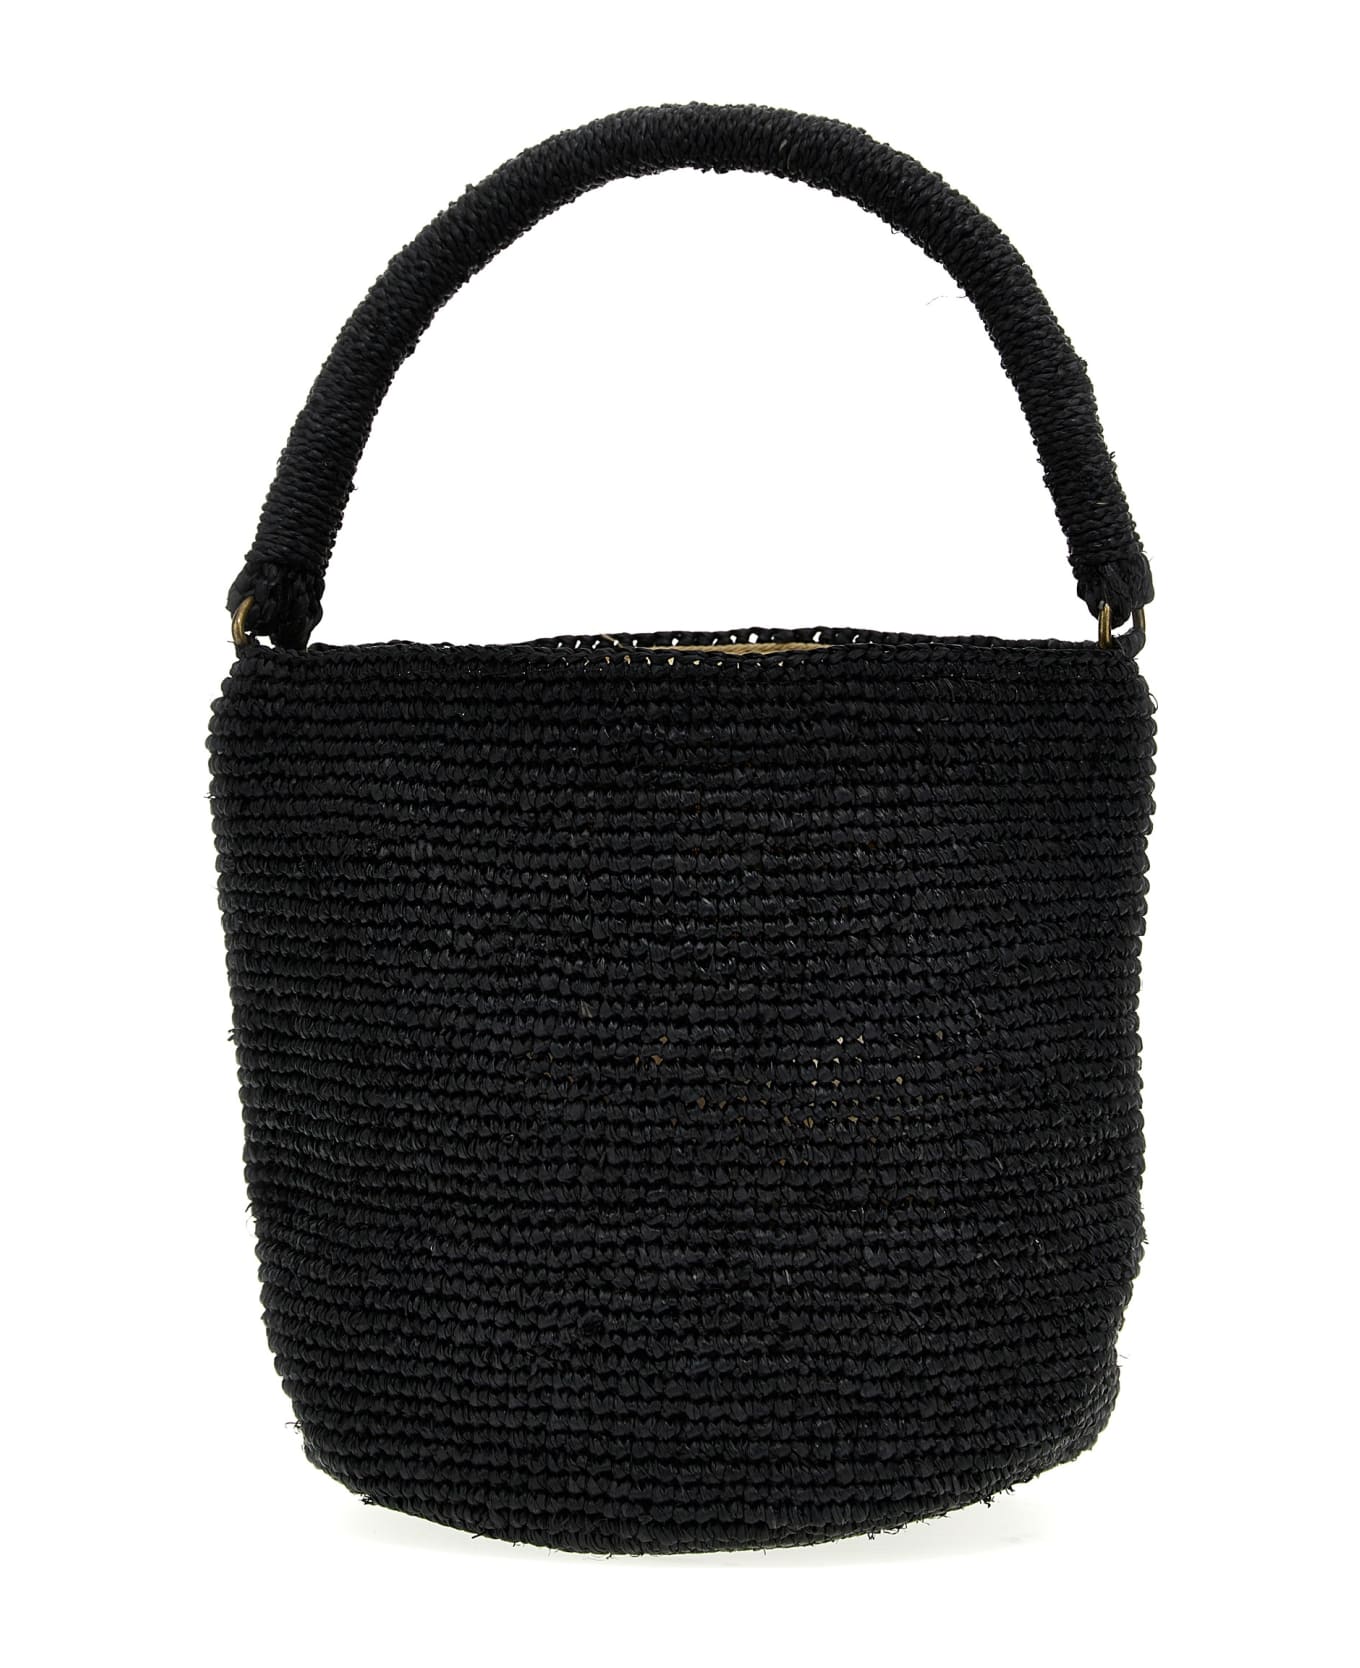 Ibeliv 'siny' Handbag - Black   トートバッグ